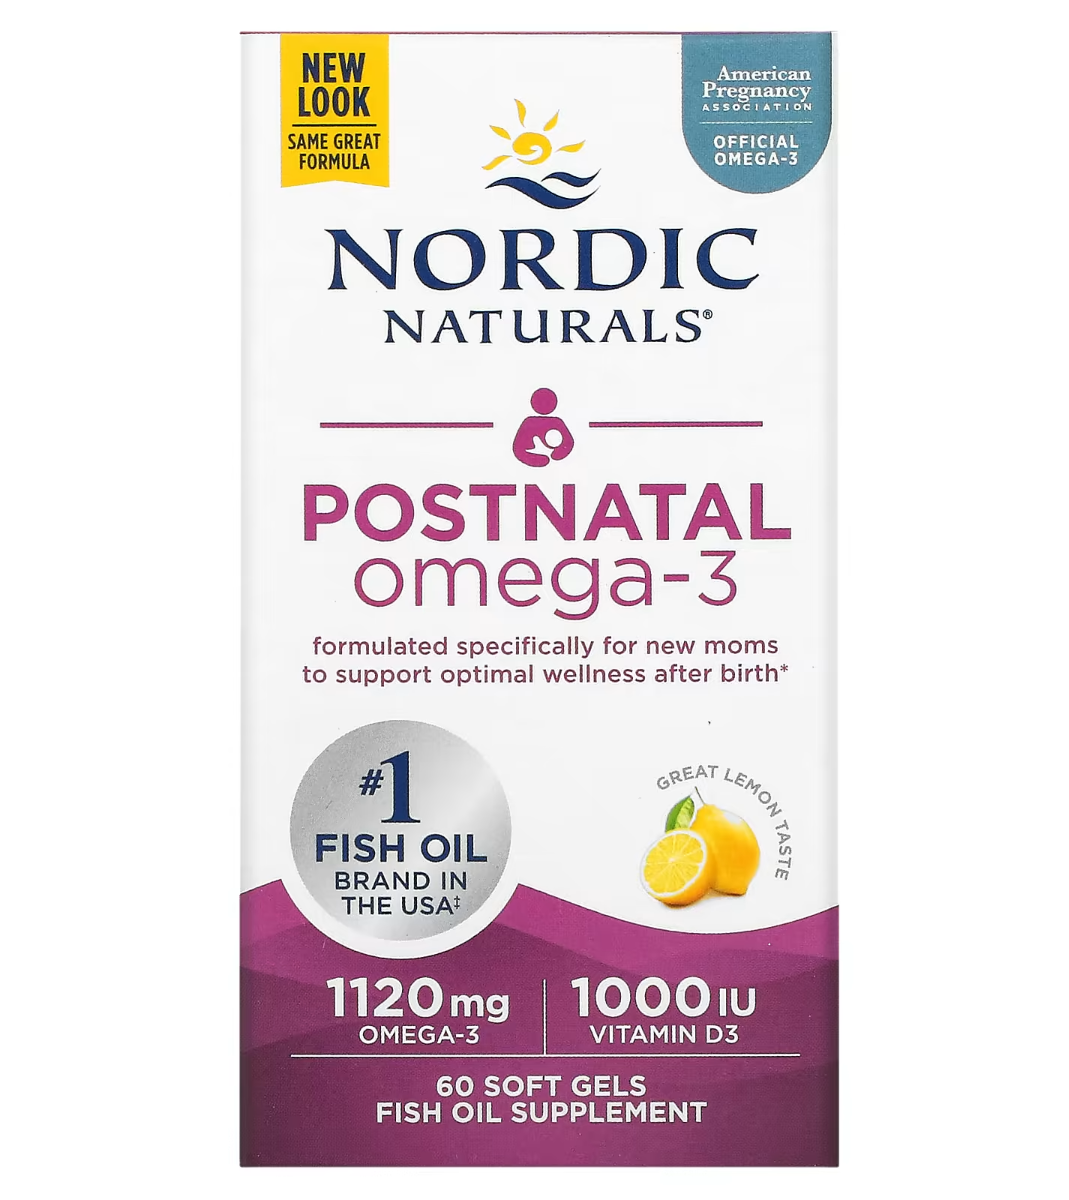 Nordic Naturals Omega-3 - Lemon 60 Fish Gels